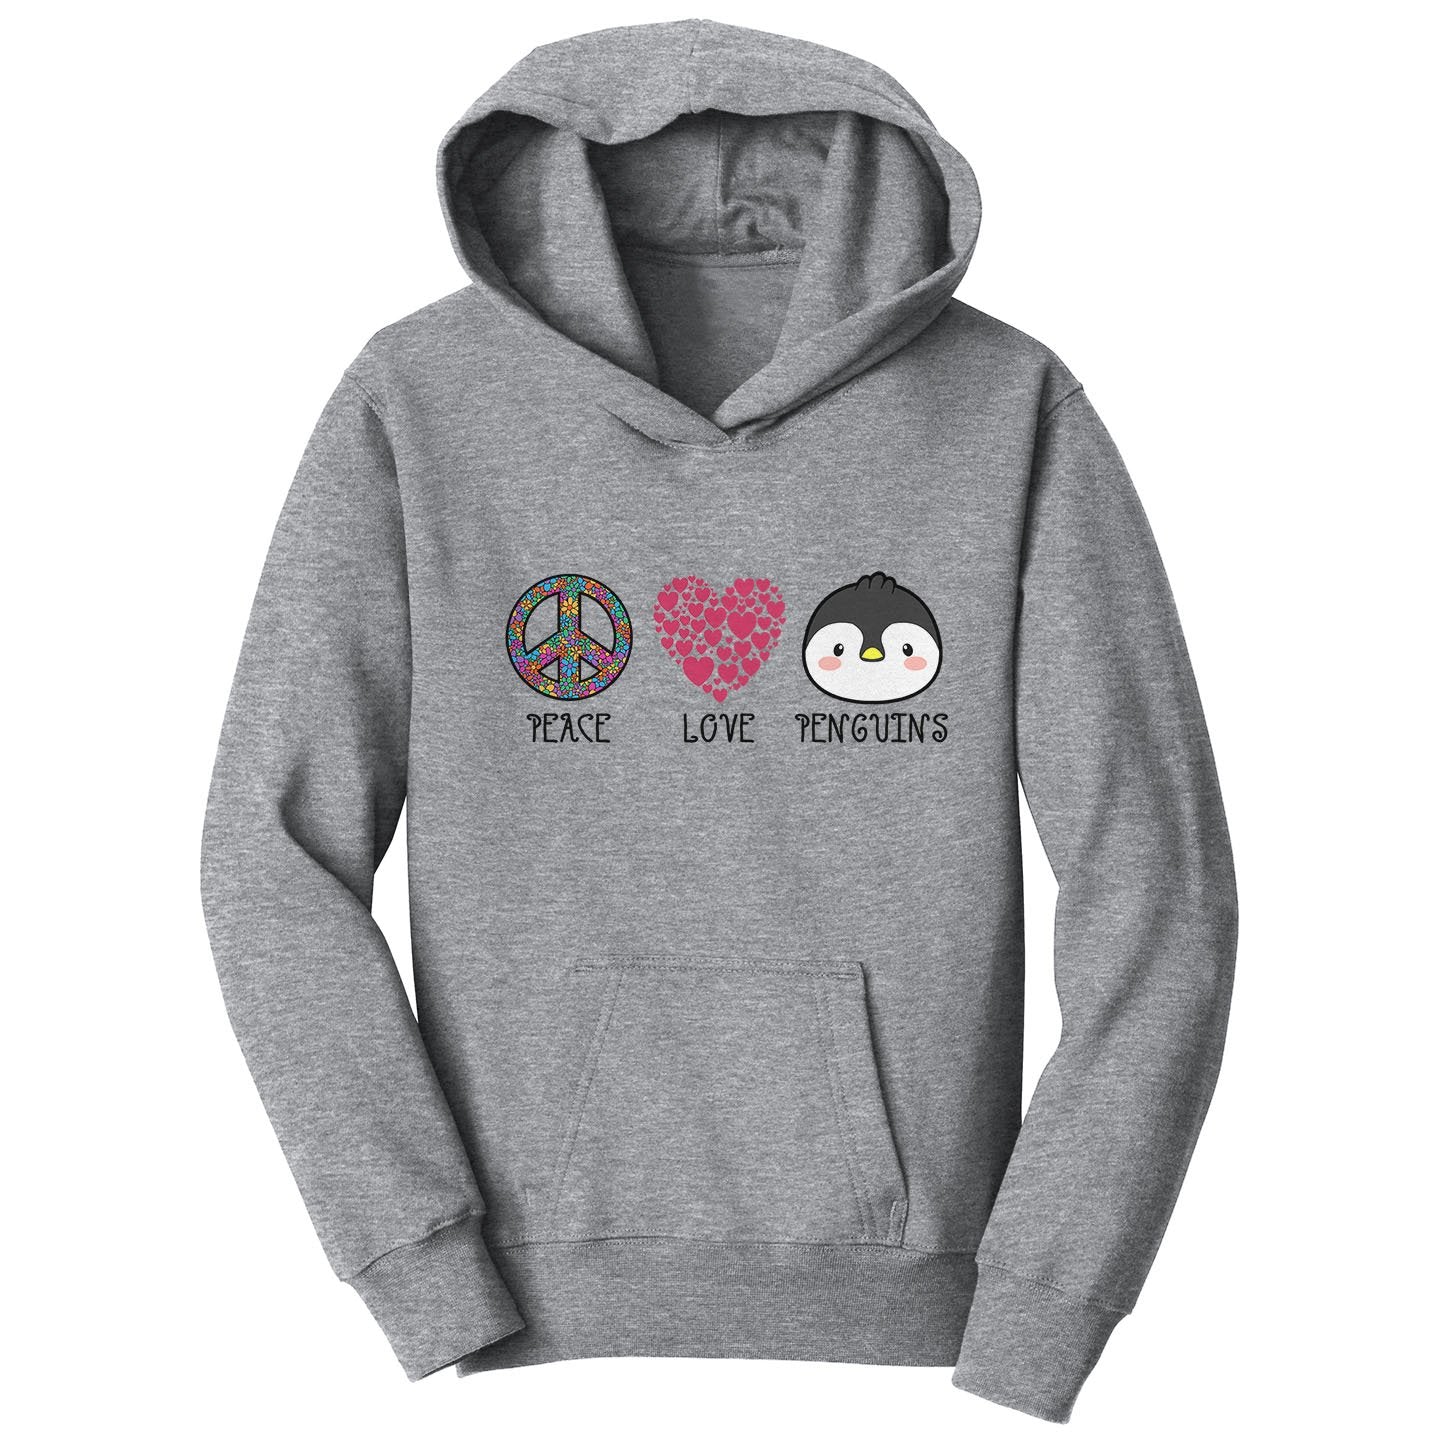 Peace Love Penguins - Kids' Unisex Hoodie Sweatshirt